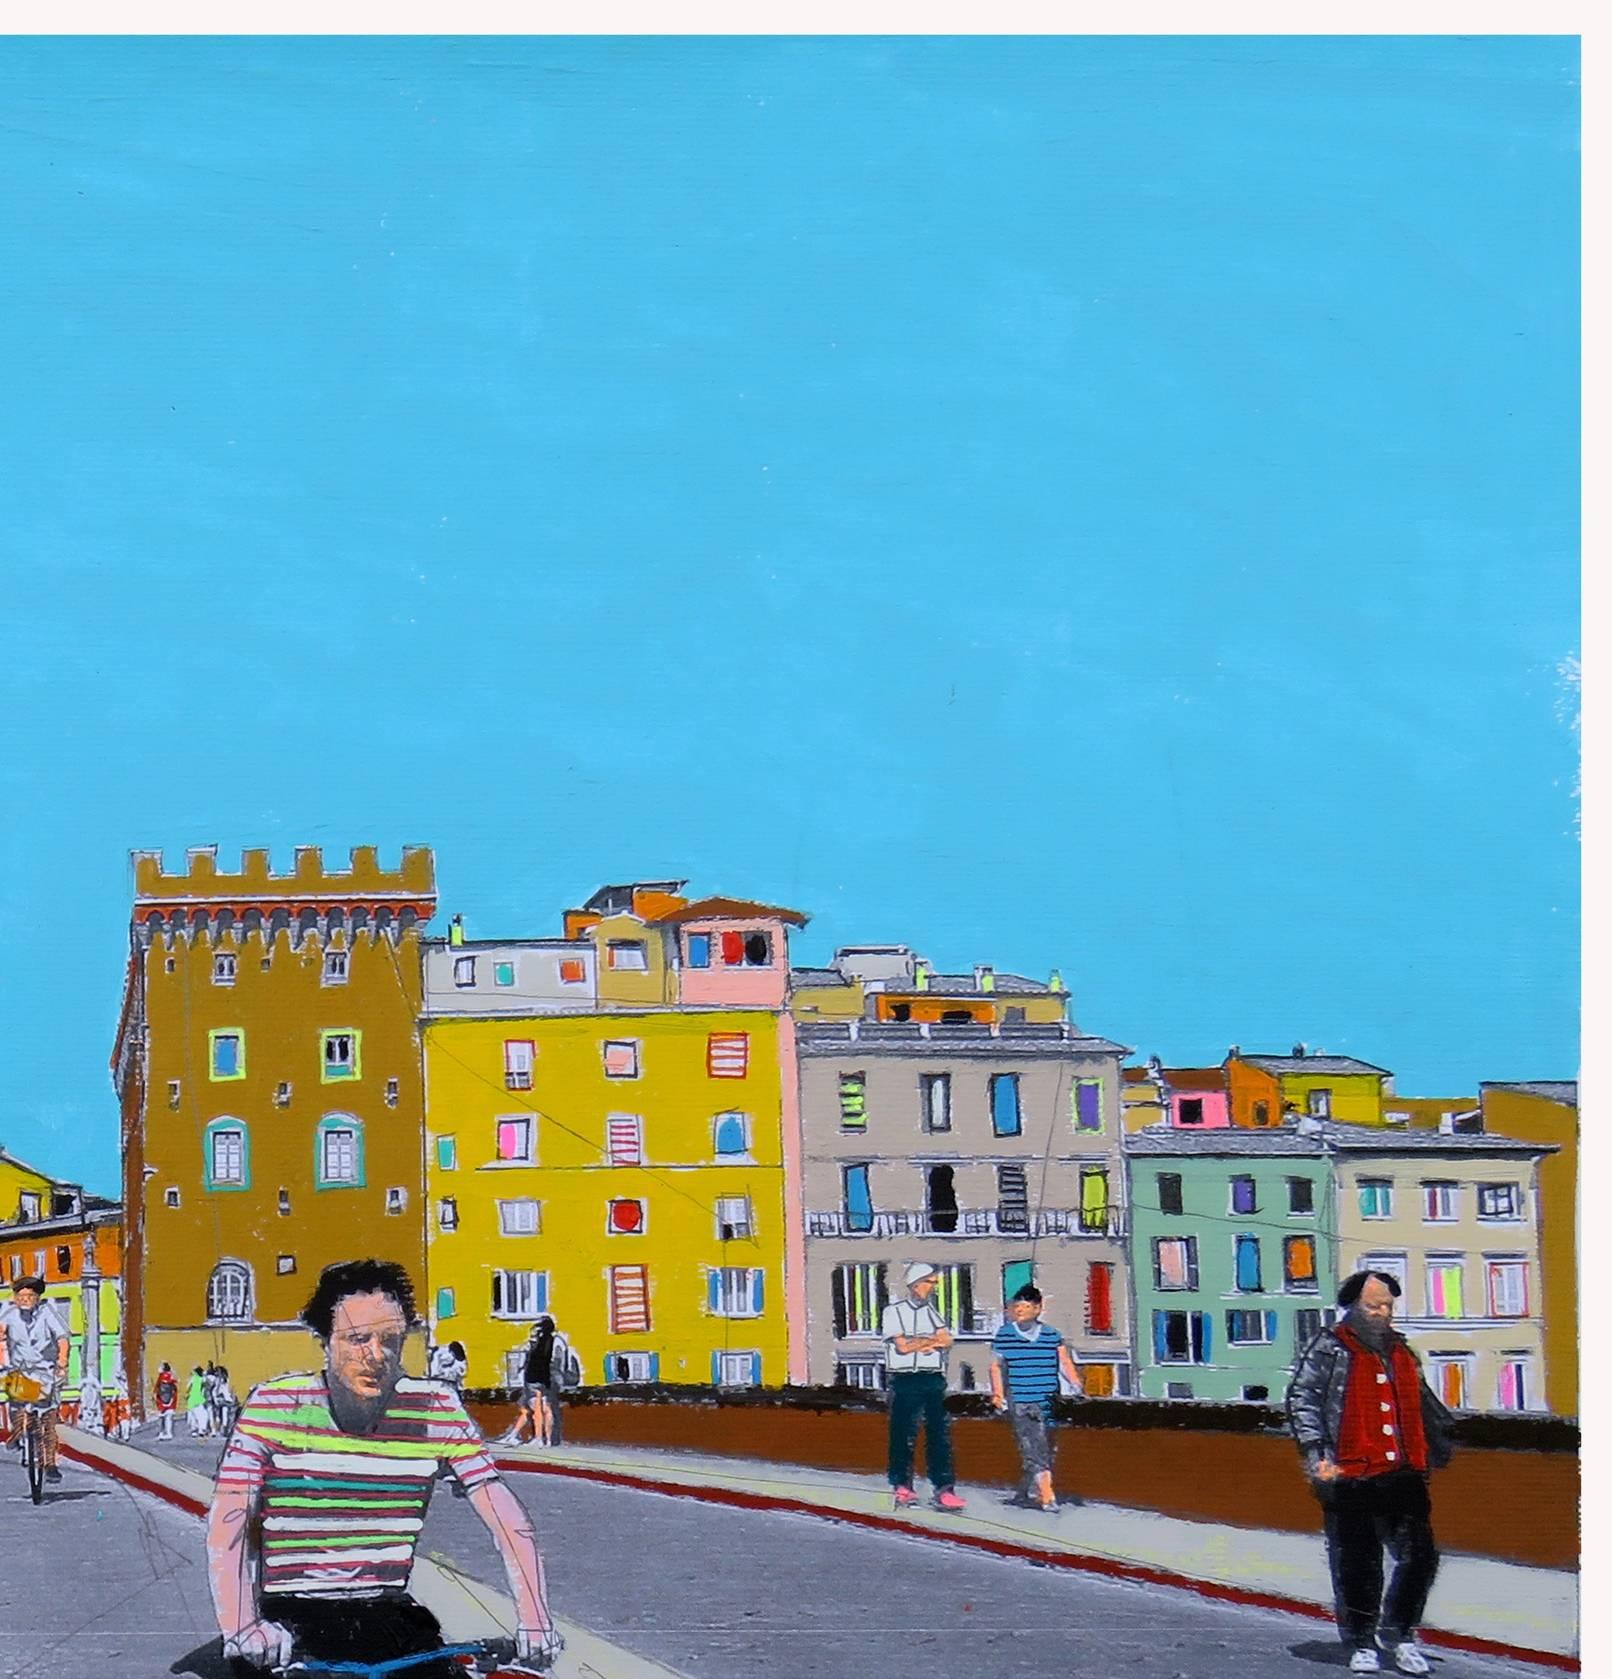 Crossing Bridges in Florence - Blue Landscape Painting by Fabio Coruzzi